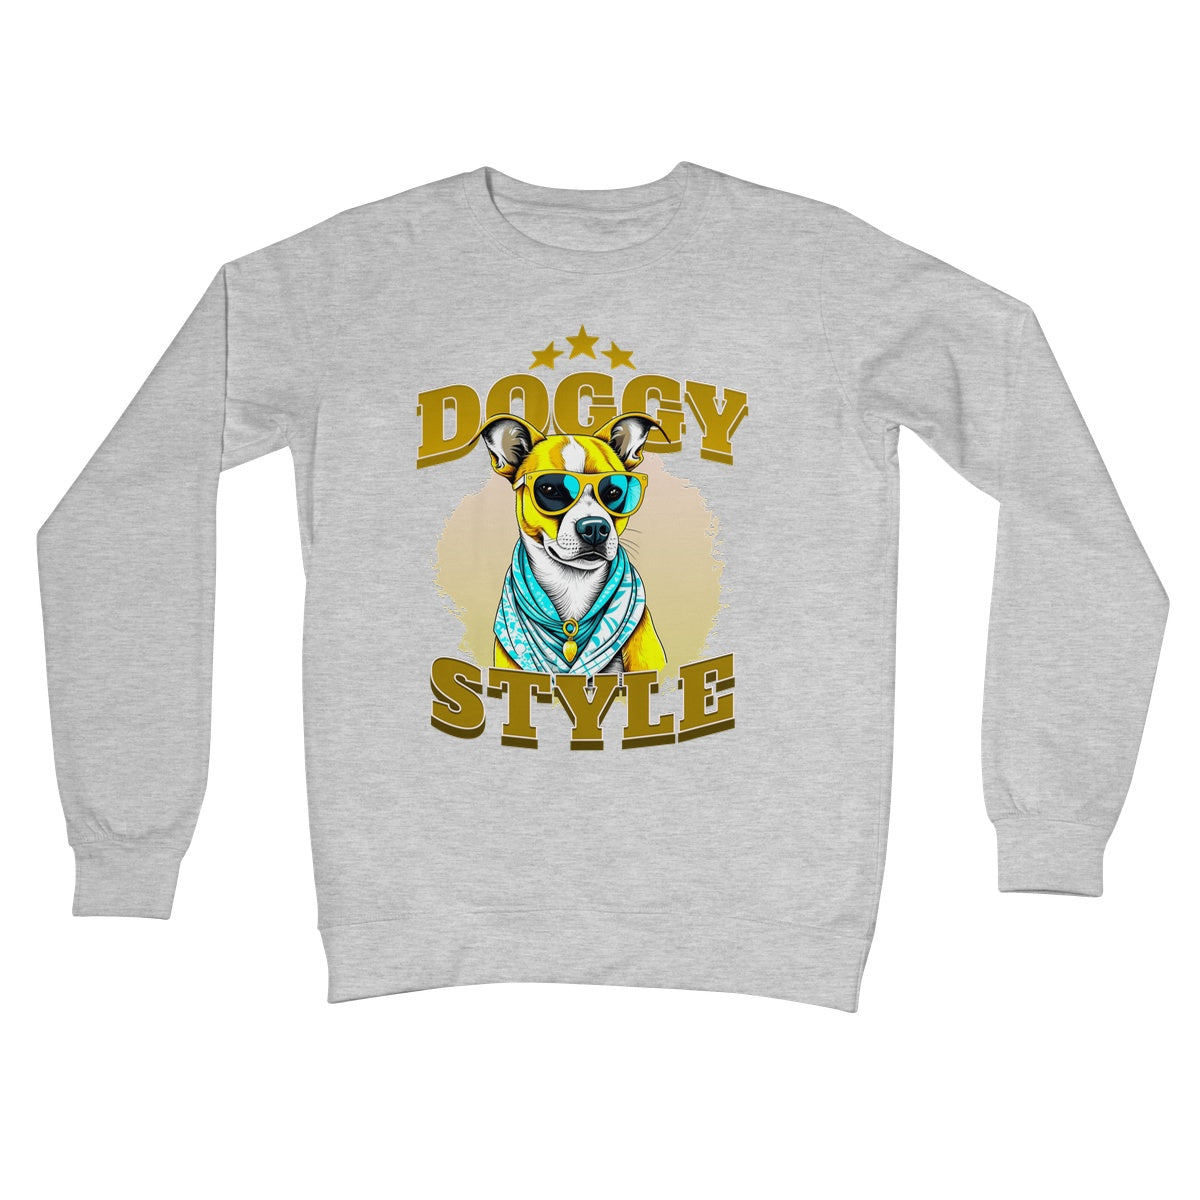 doggy style jumper grey